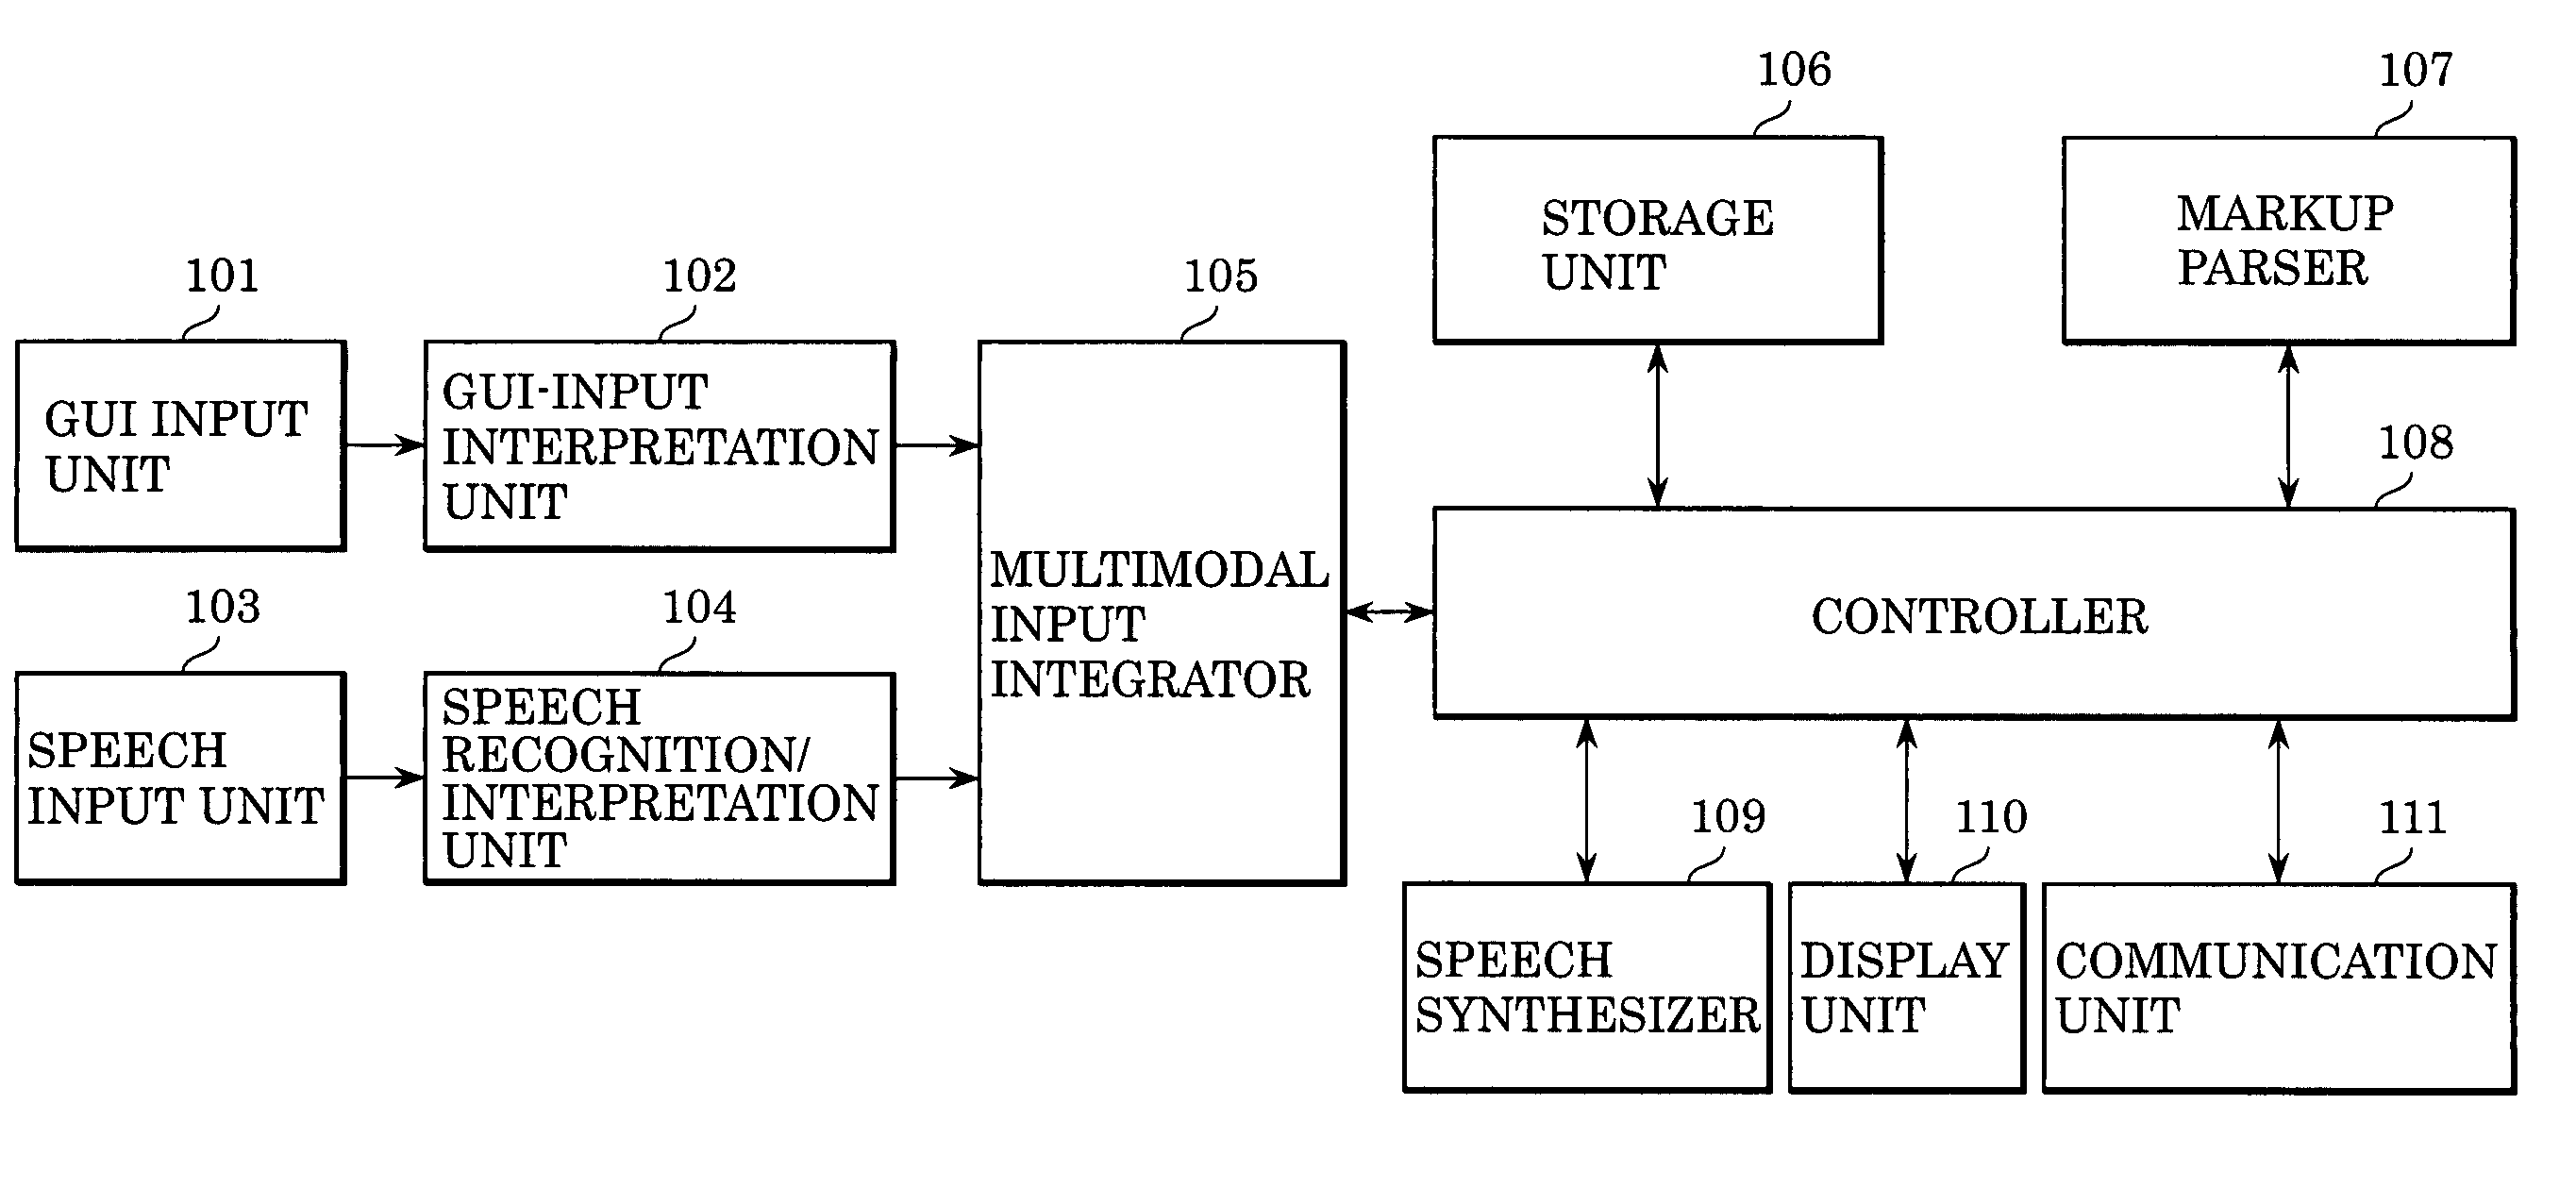 Multimodal input method